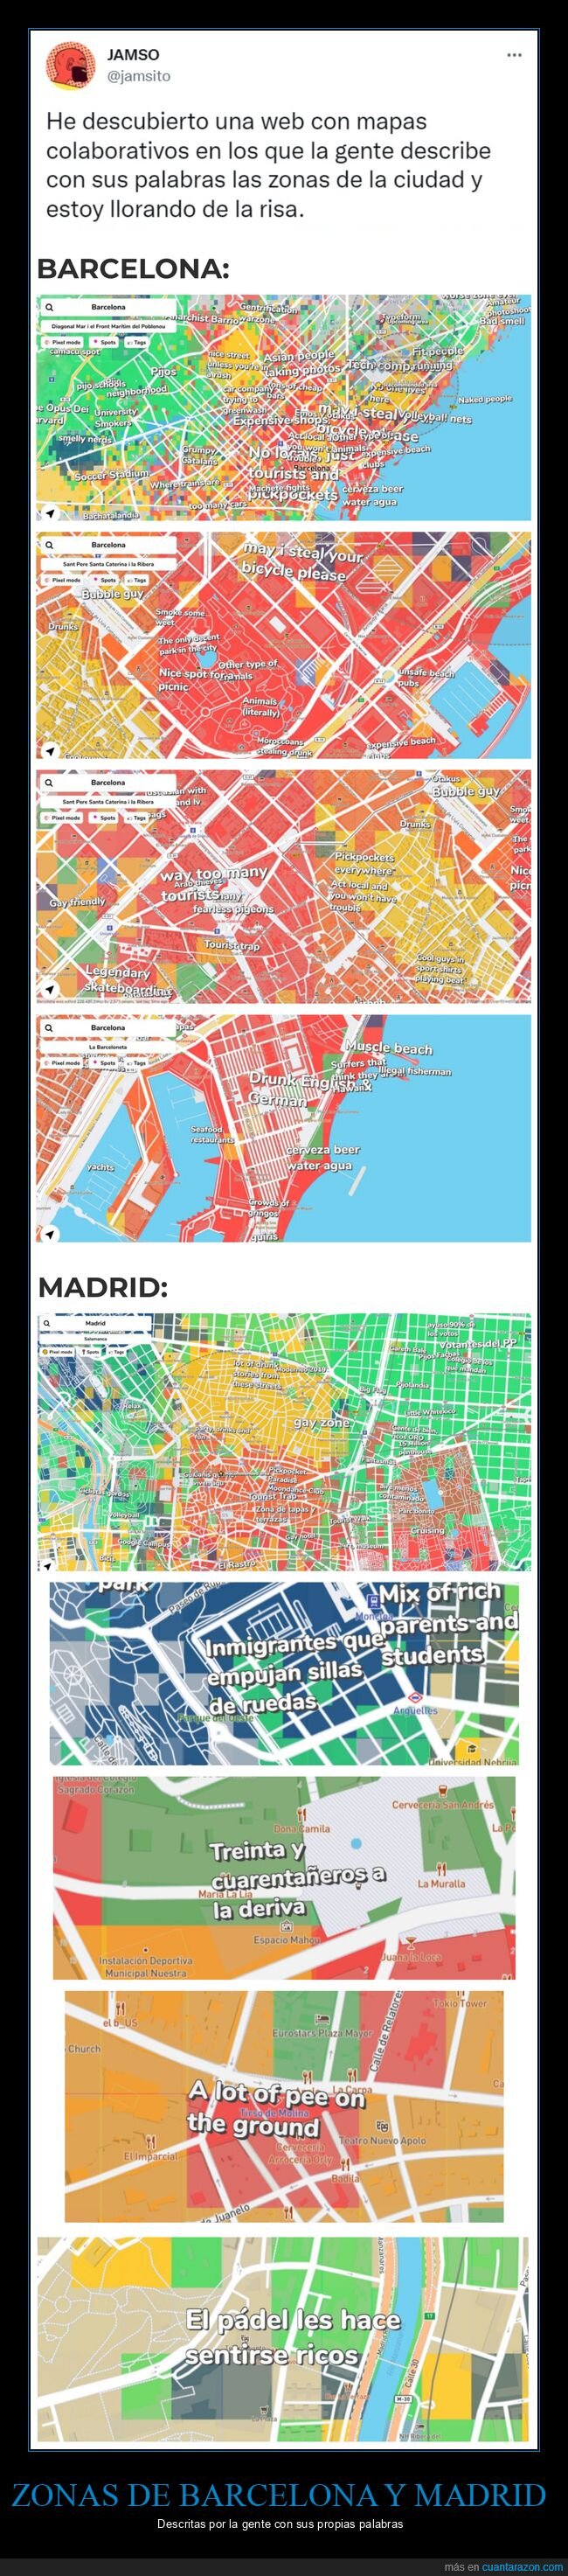 barcelona,madrid,zonas,mapas